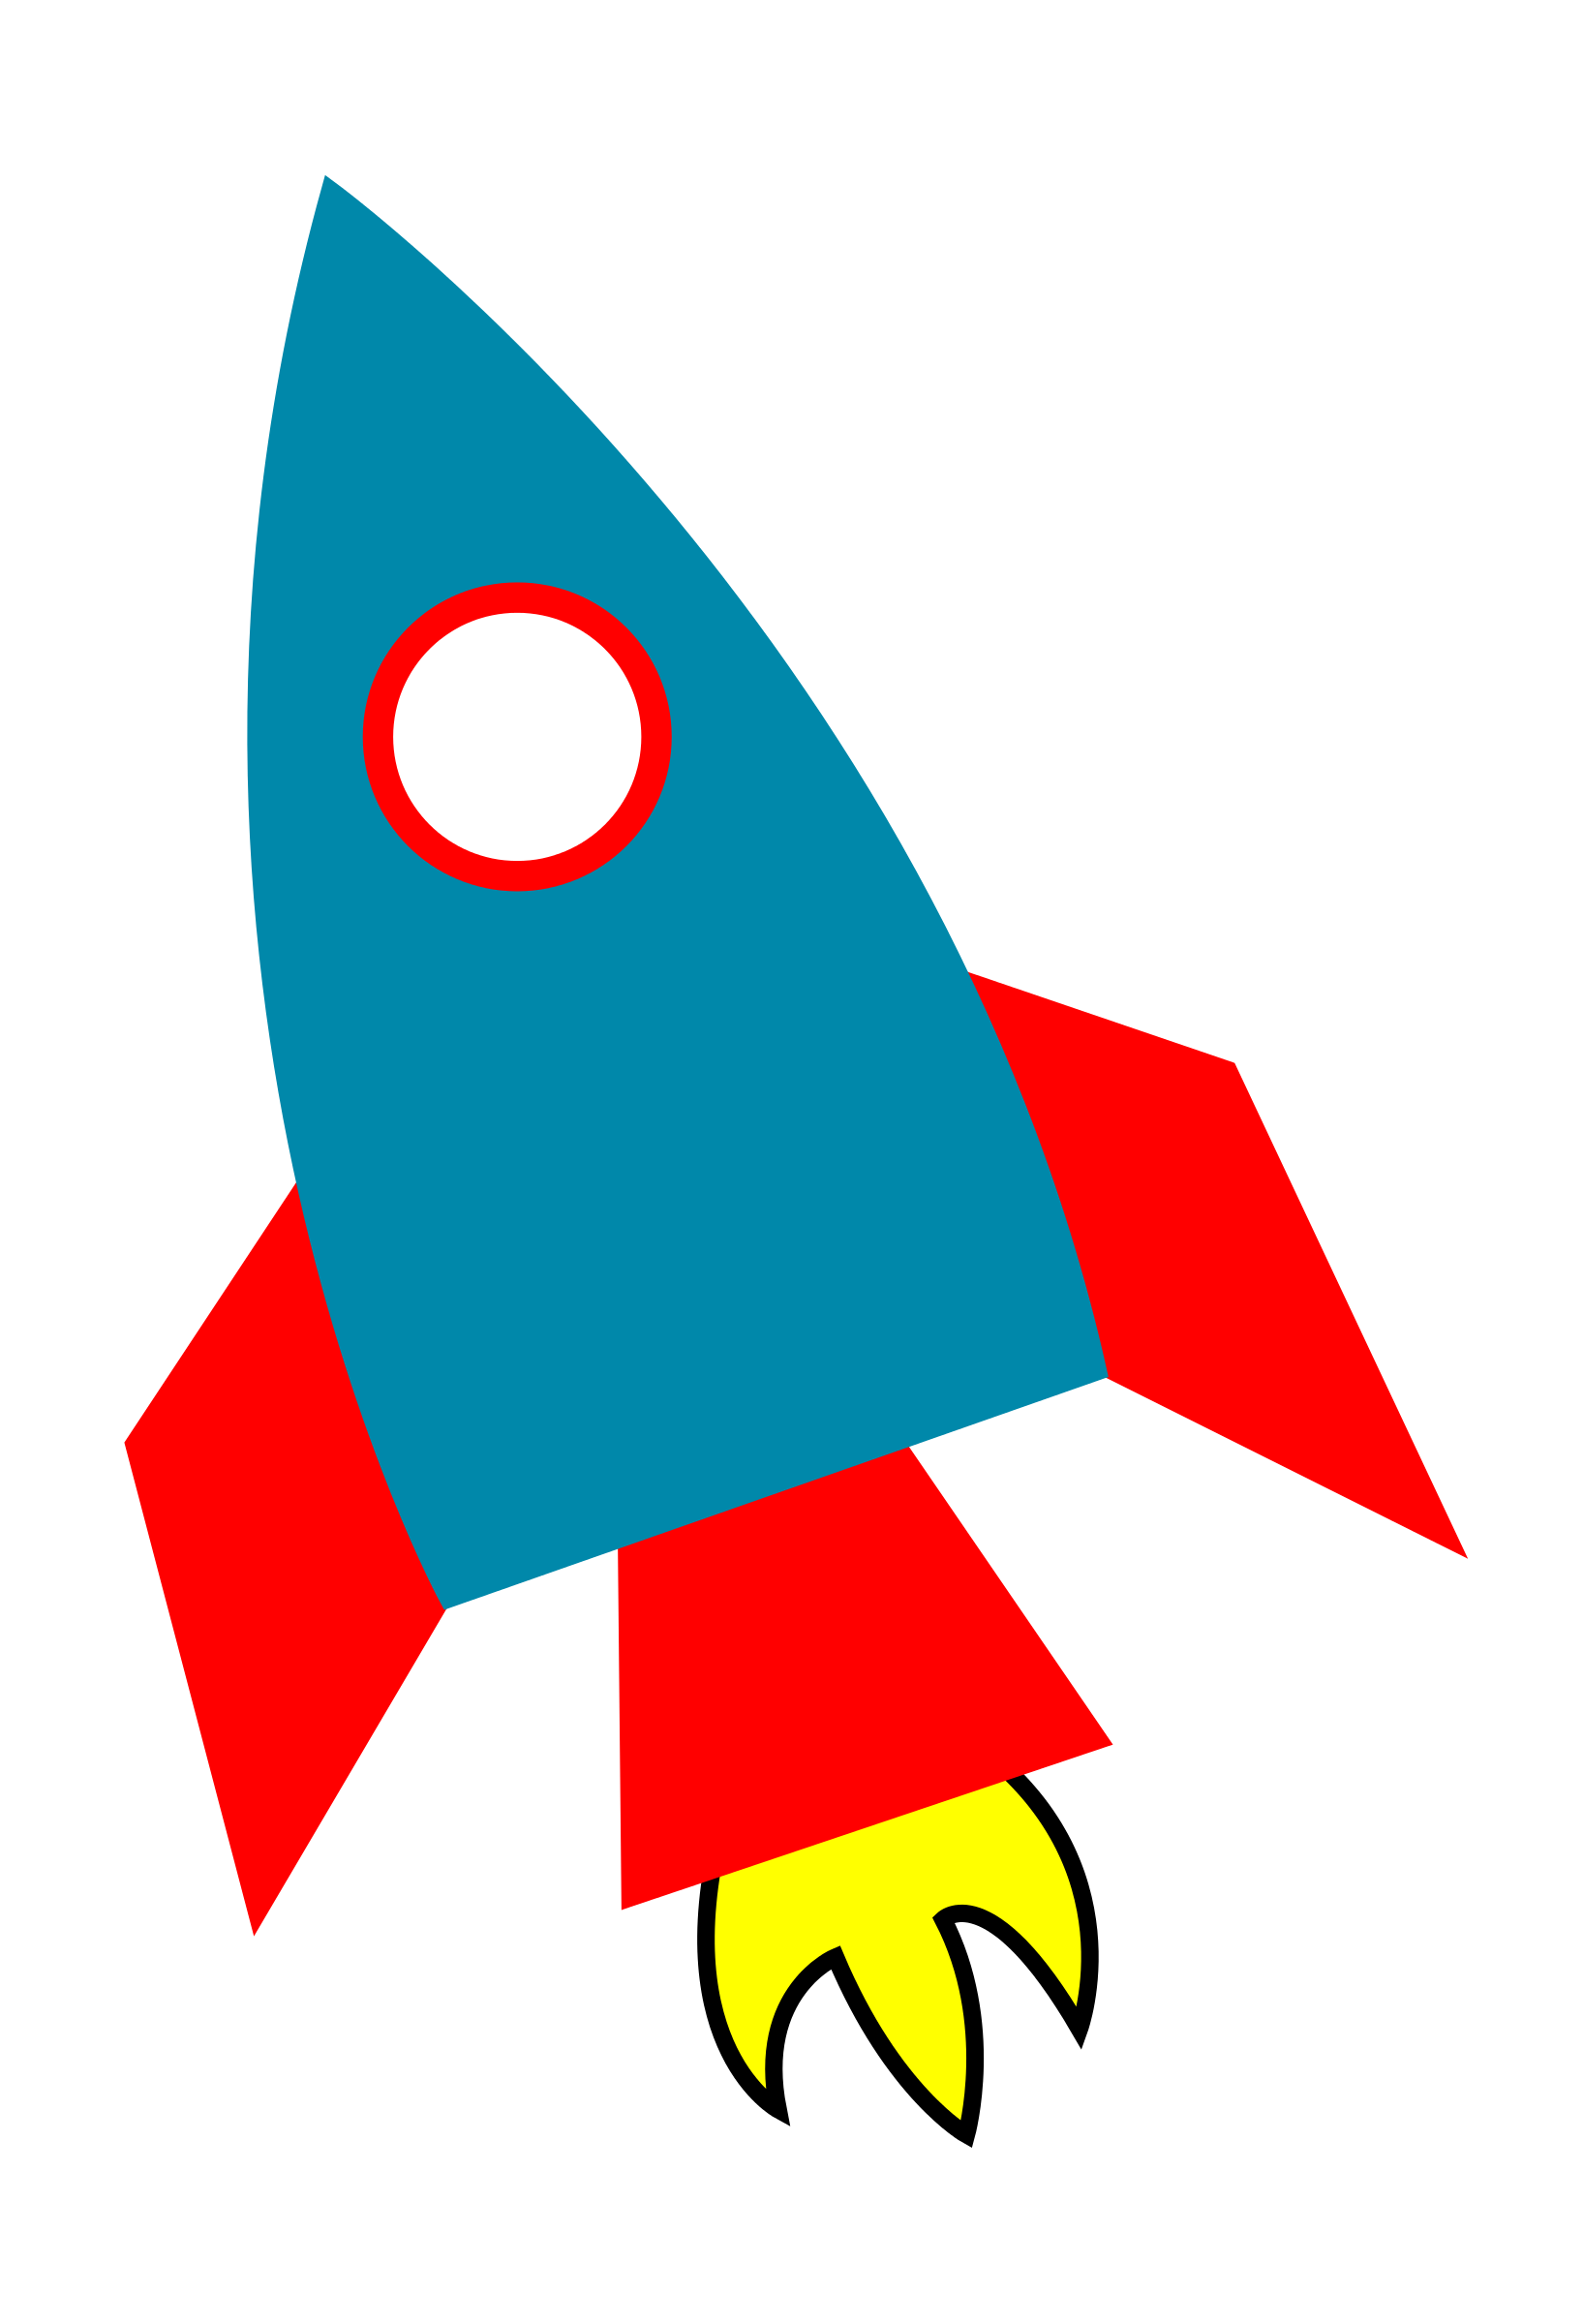 Rocket clipart 4